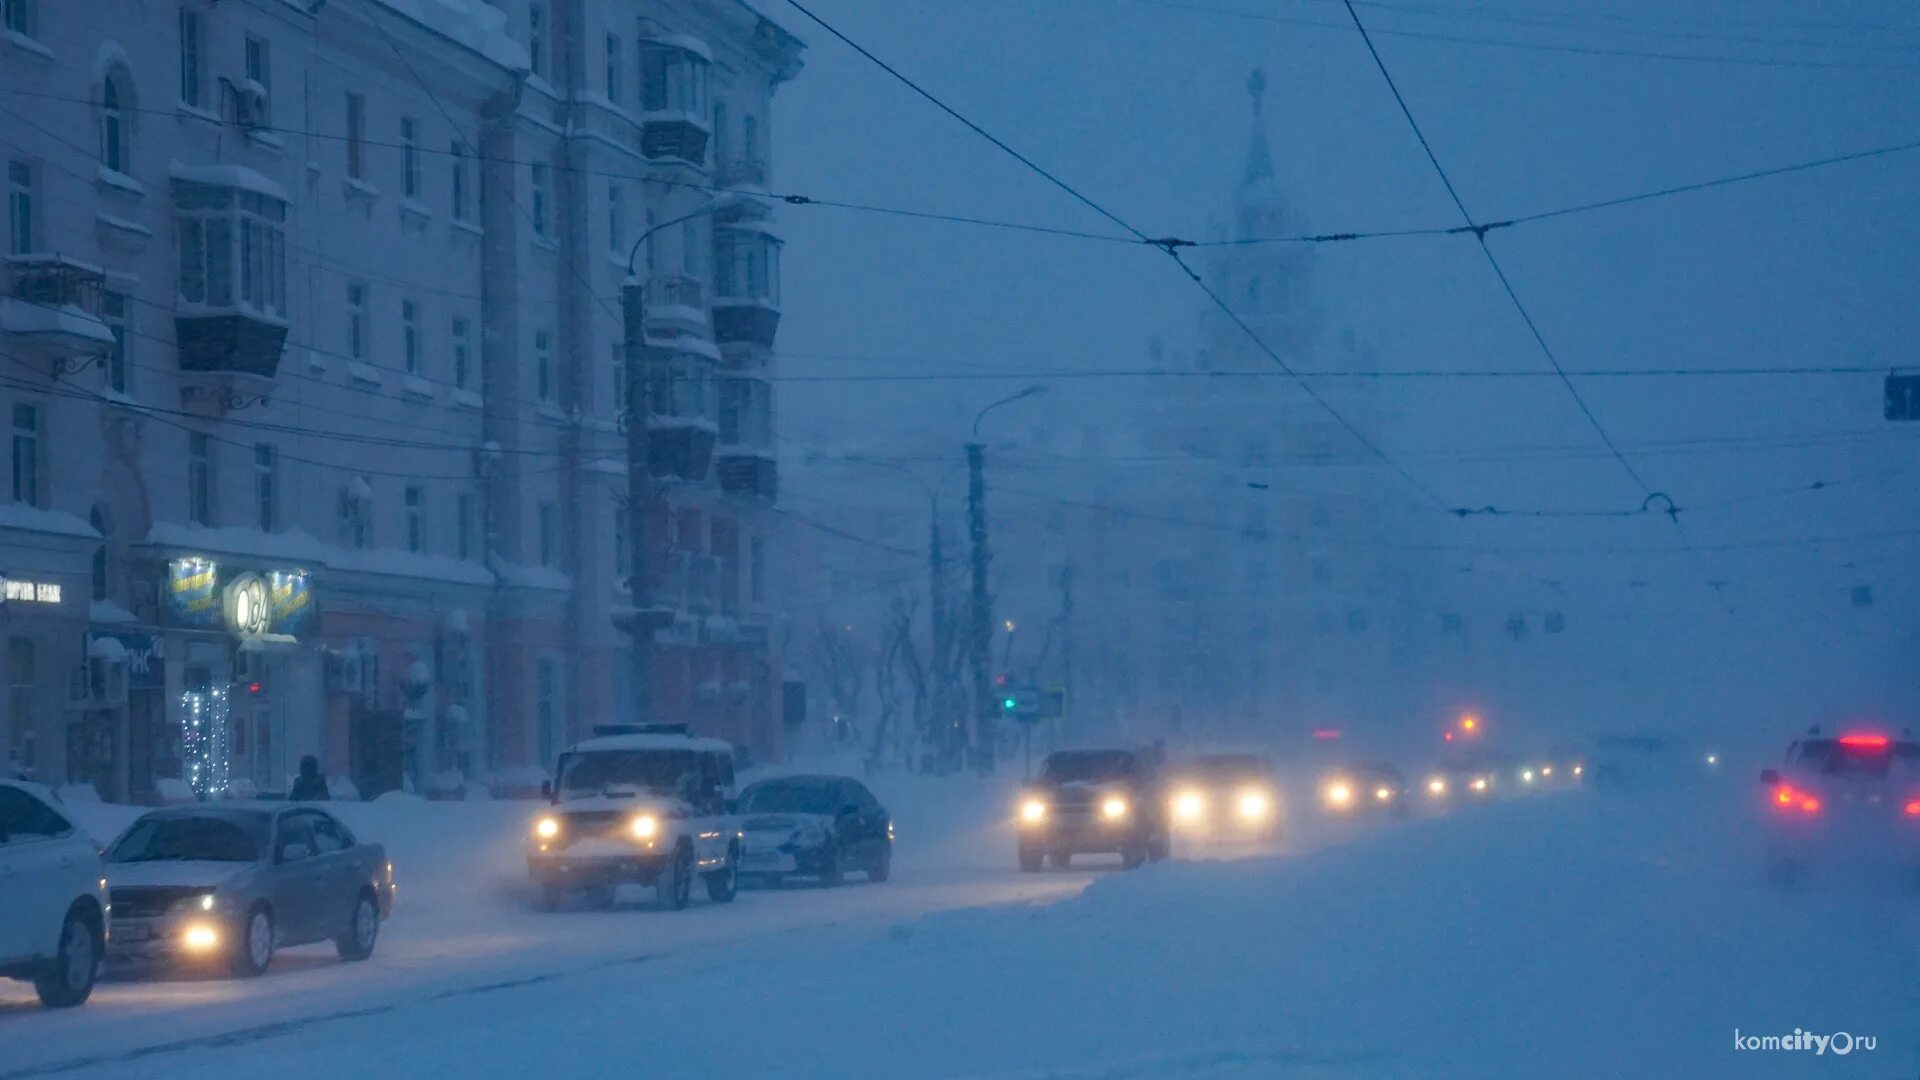 Комсомольск на Амуре снегопад 2014. Комсомольск на Амуре снегопад. Комсомольск-на-Амуре снегопад 2013. Комсомольск на Амуре зима 2013. 23 декабря 2014 г